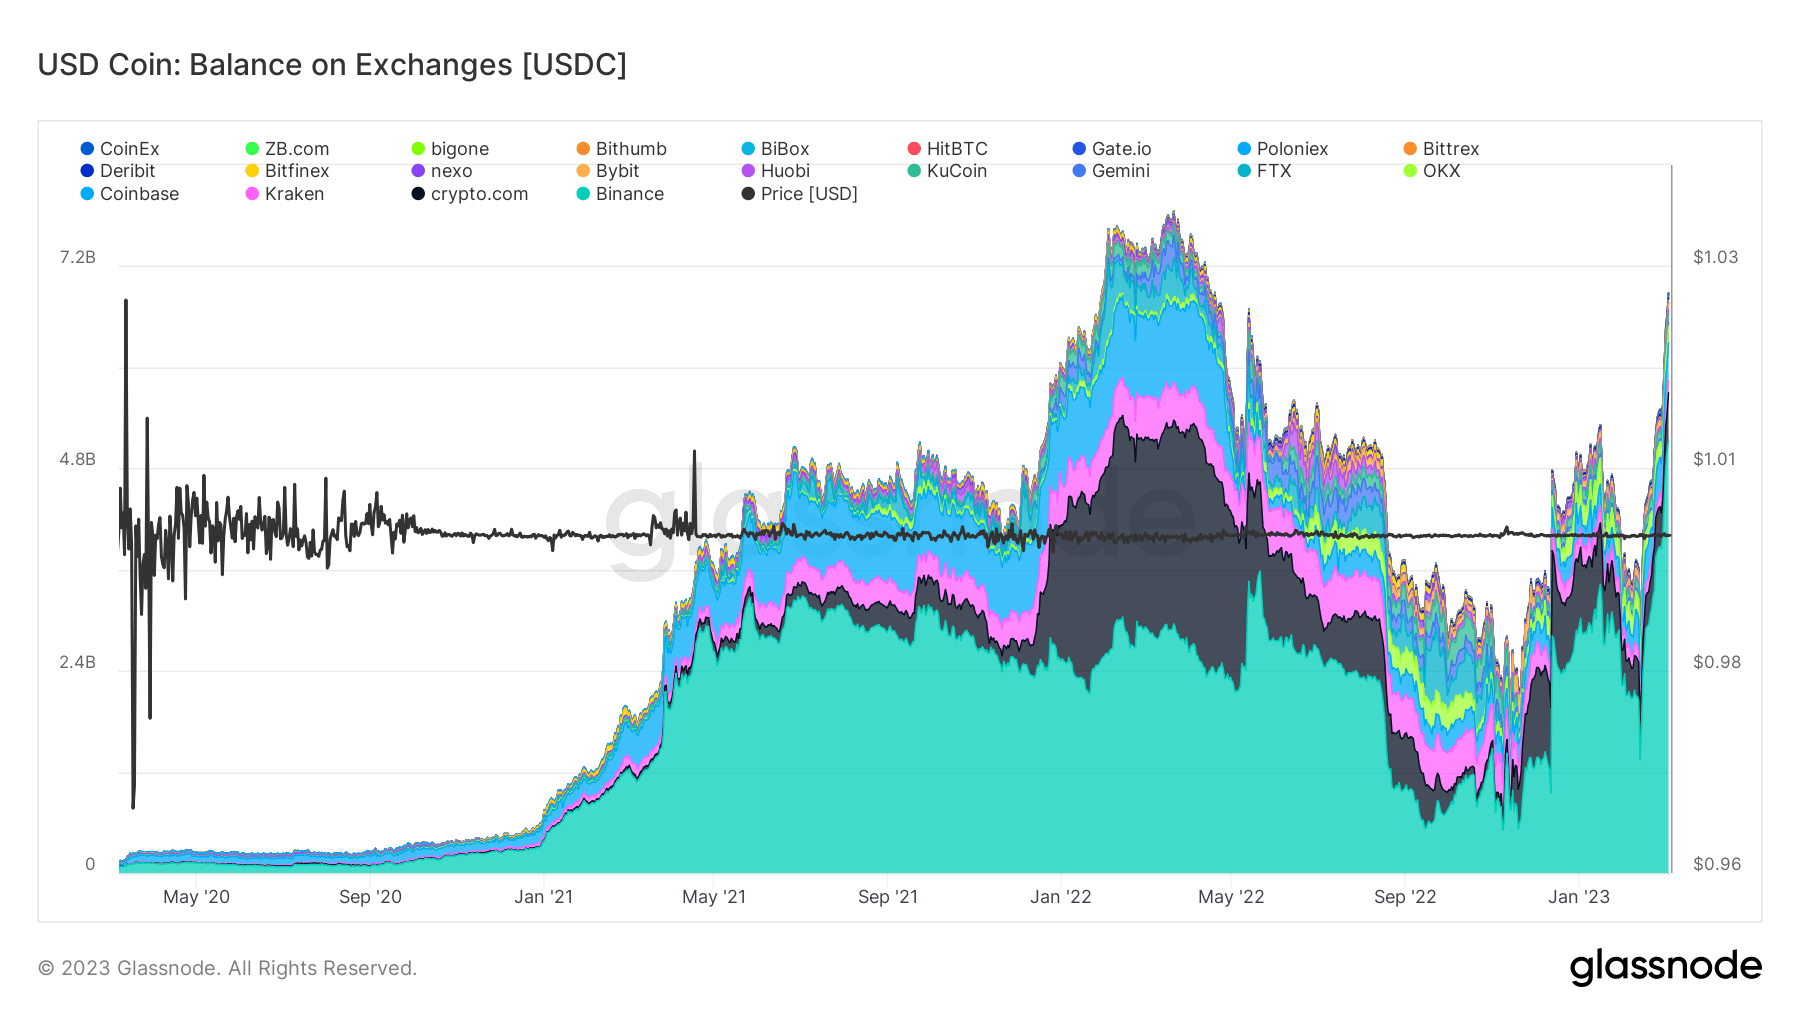 USDC balance on exchanges (Source: Glassnode)